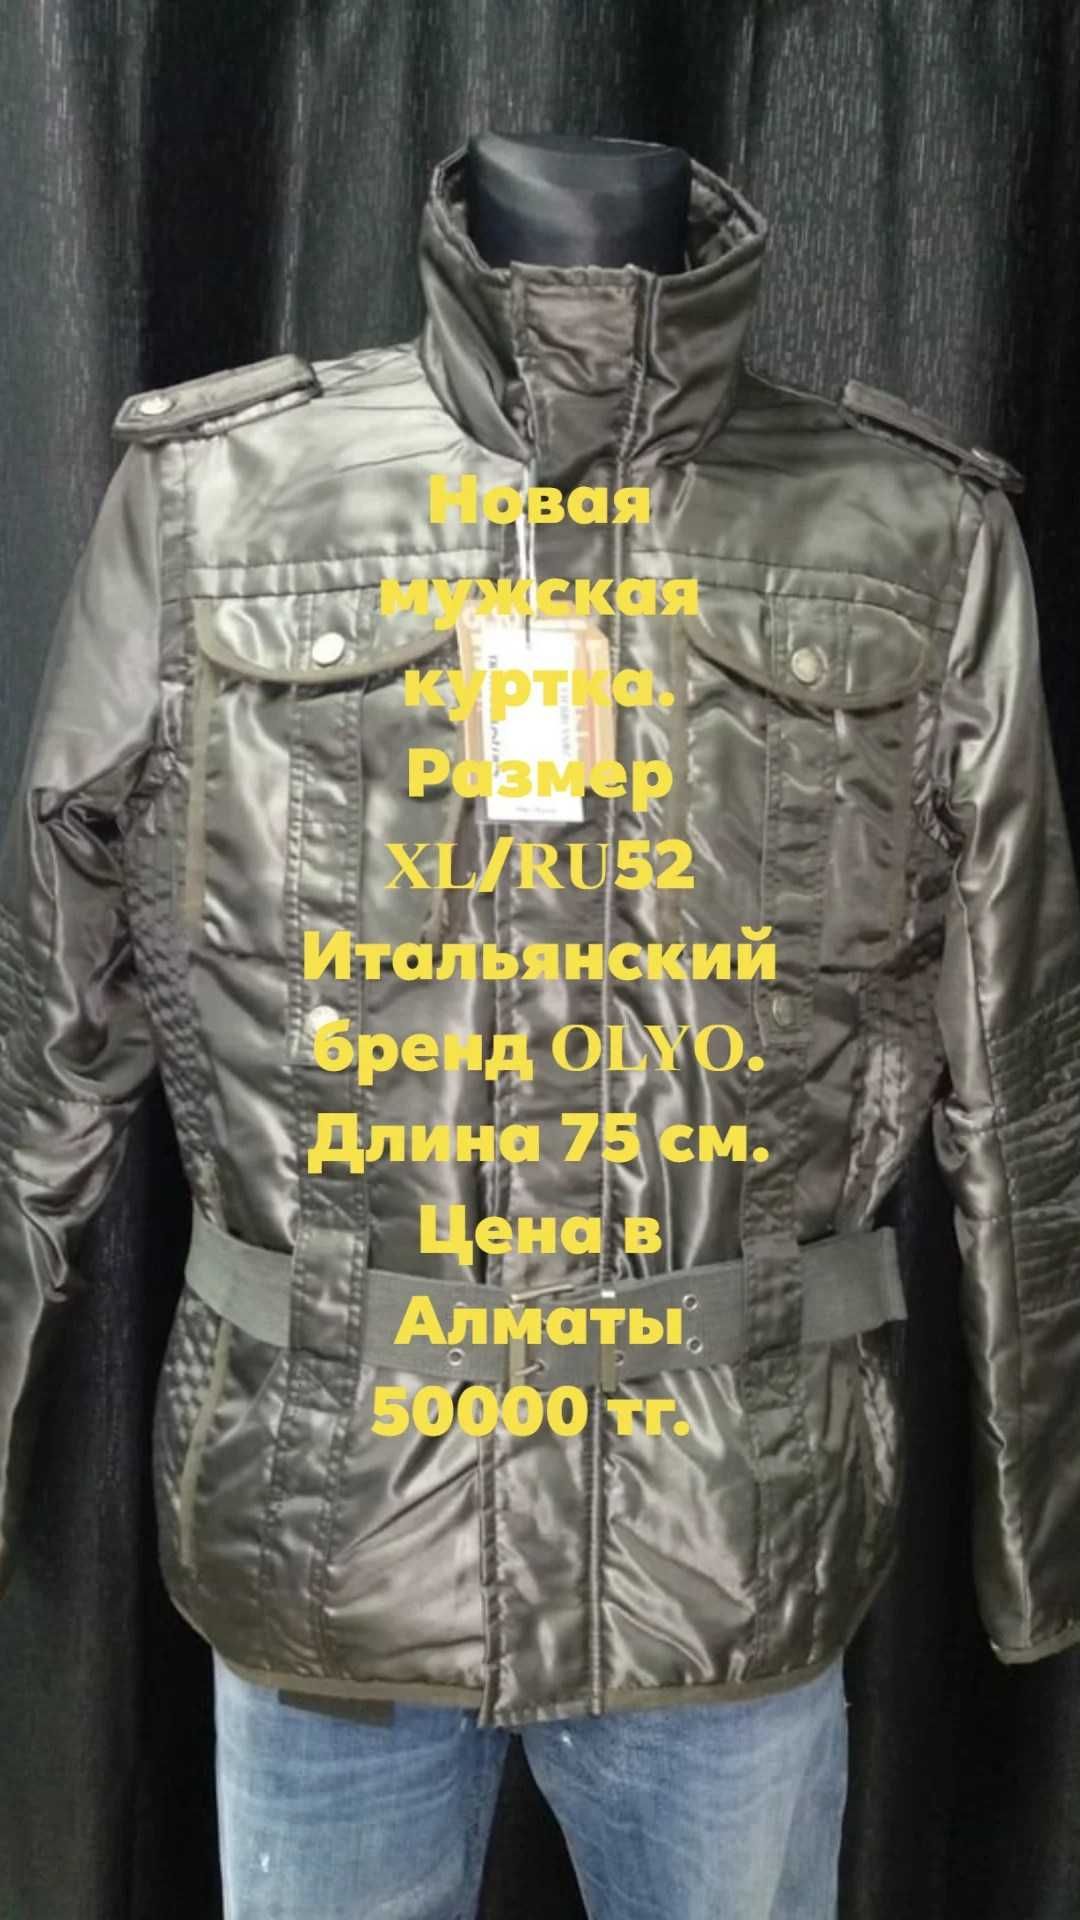 Новая мужская куртка. 
Размер XXL/RU54
Итальянский бренд JOHN REED.